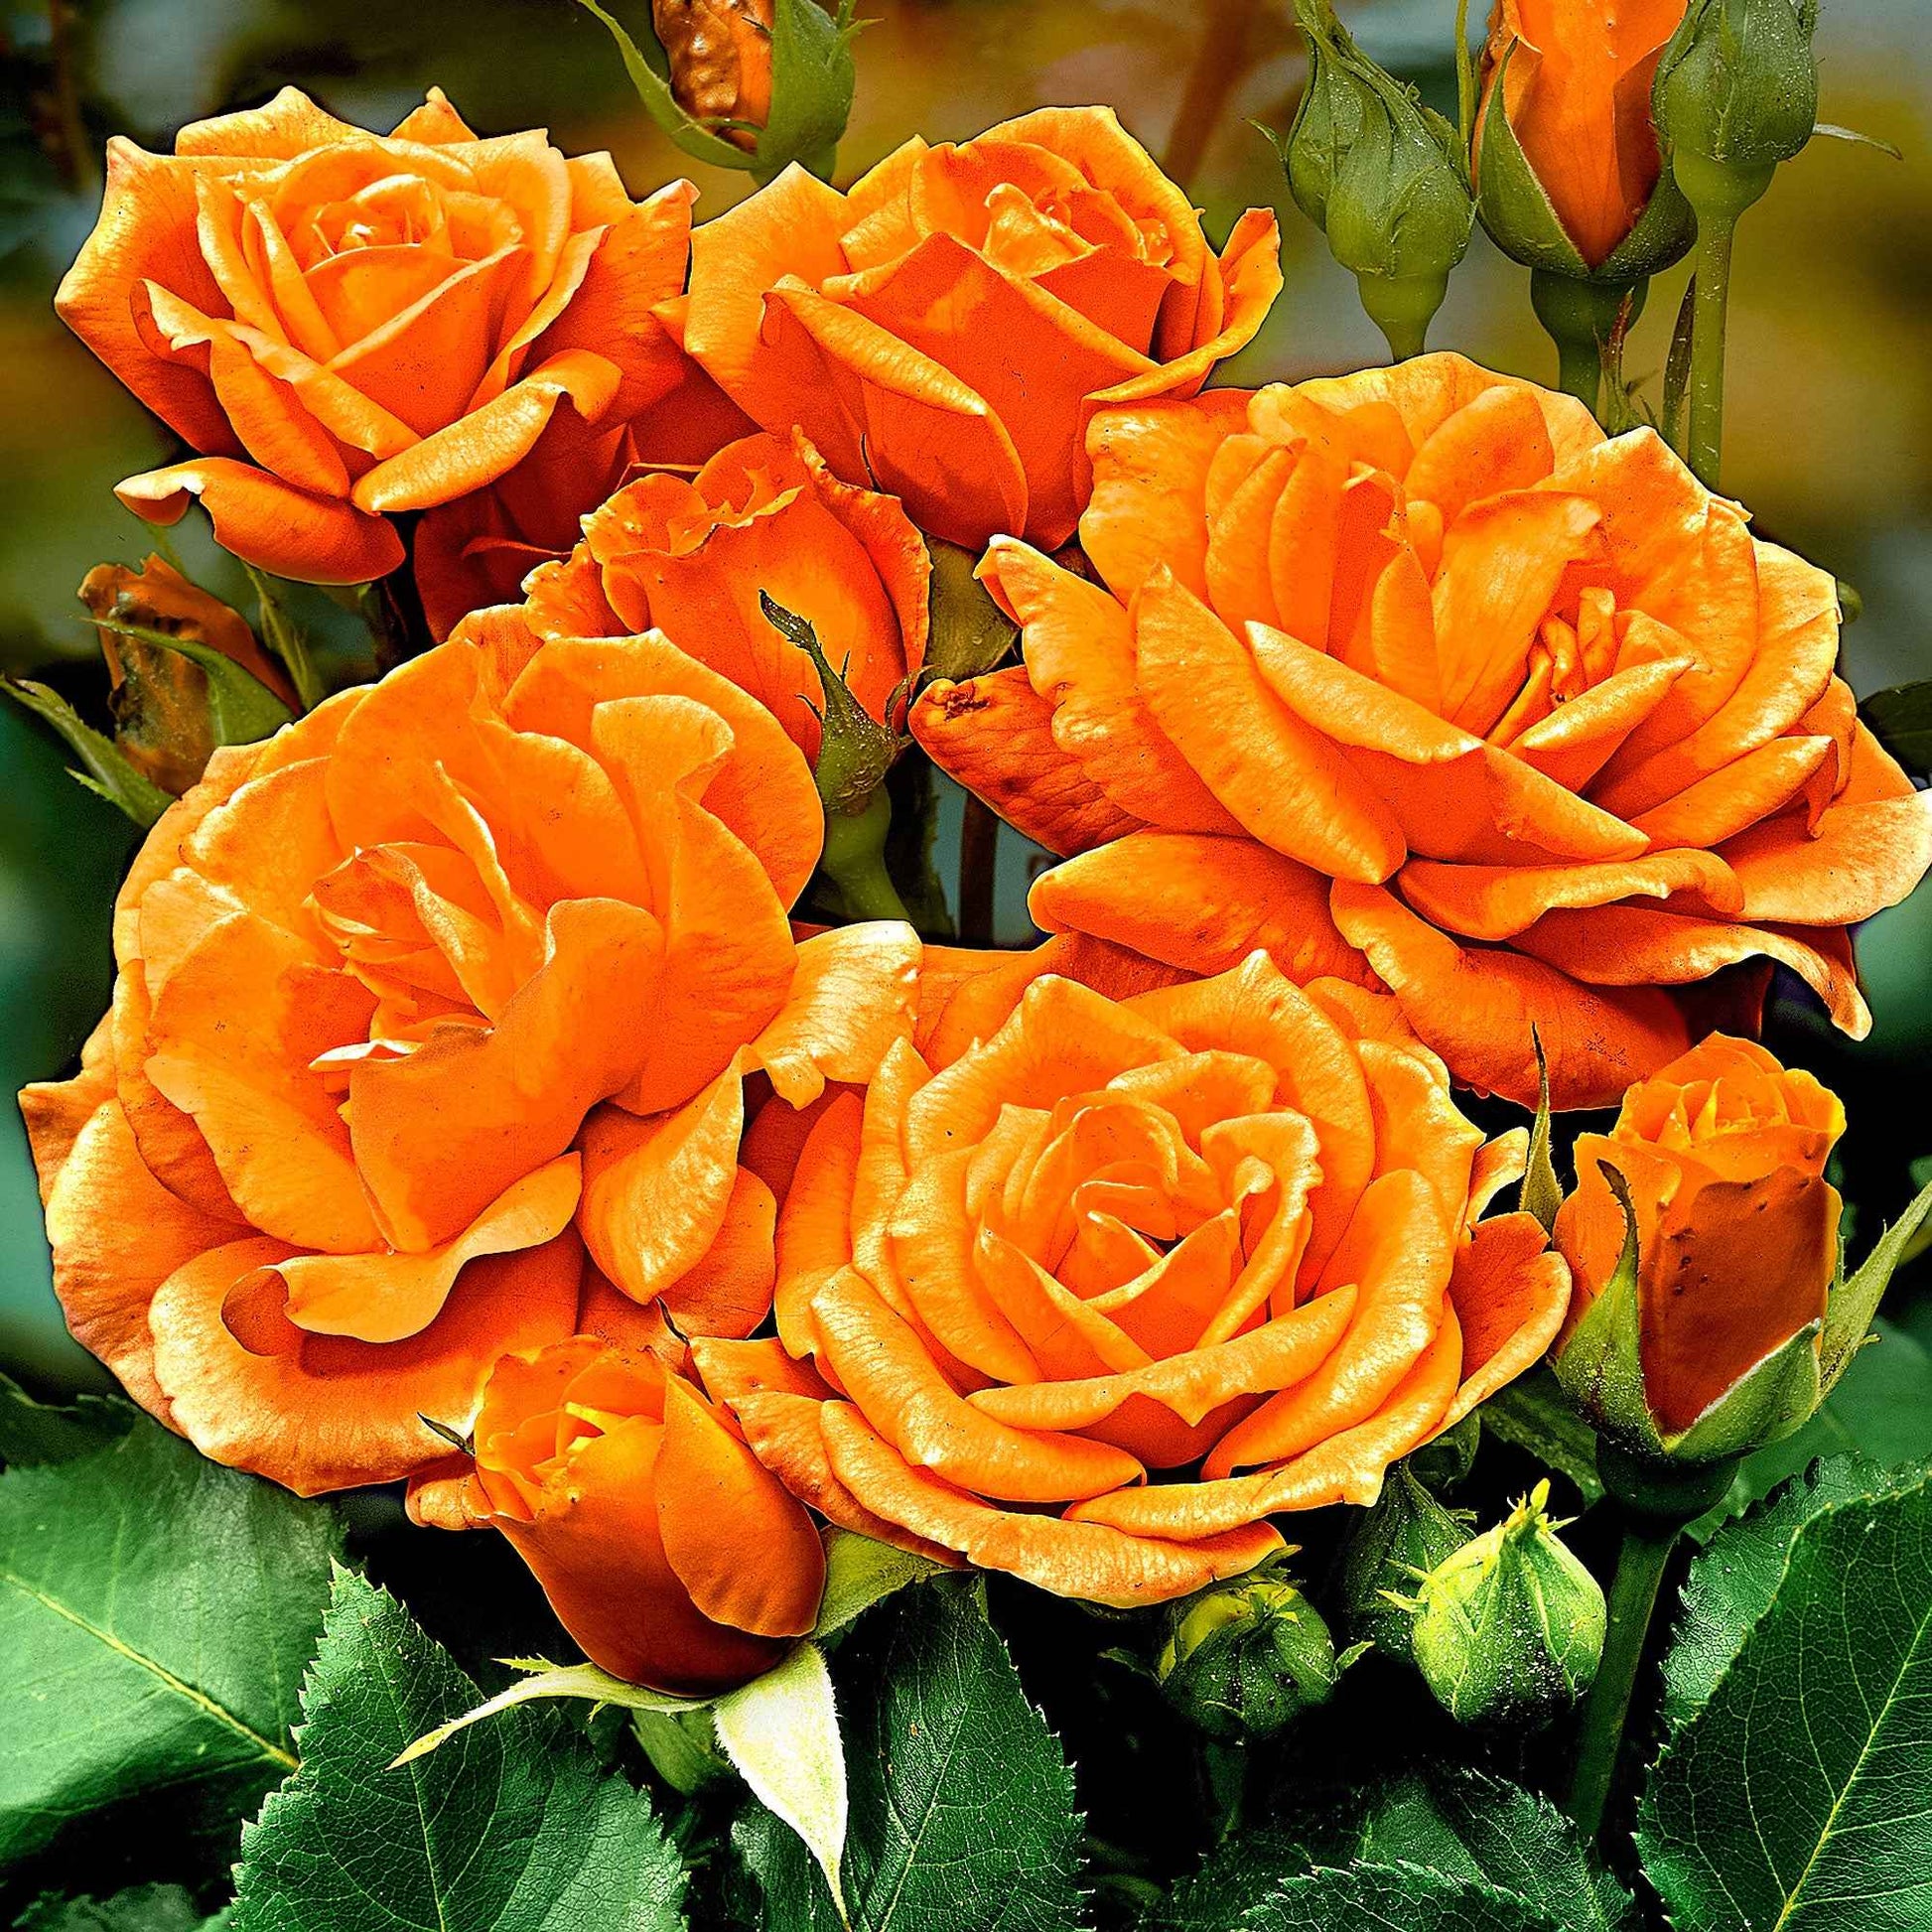 Stammrose Rosa 'Orange Sensation' orange - Winterhart - Pflanzensorten